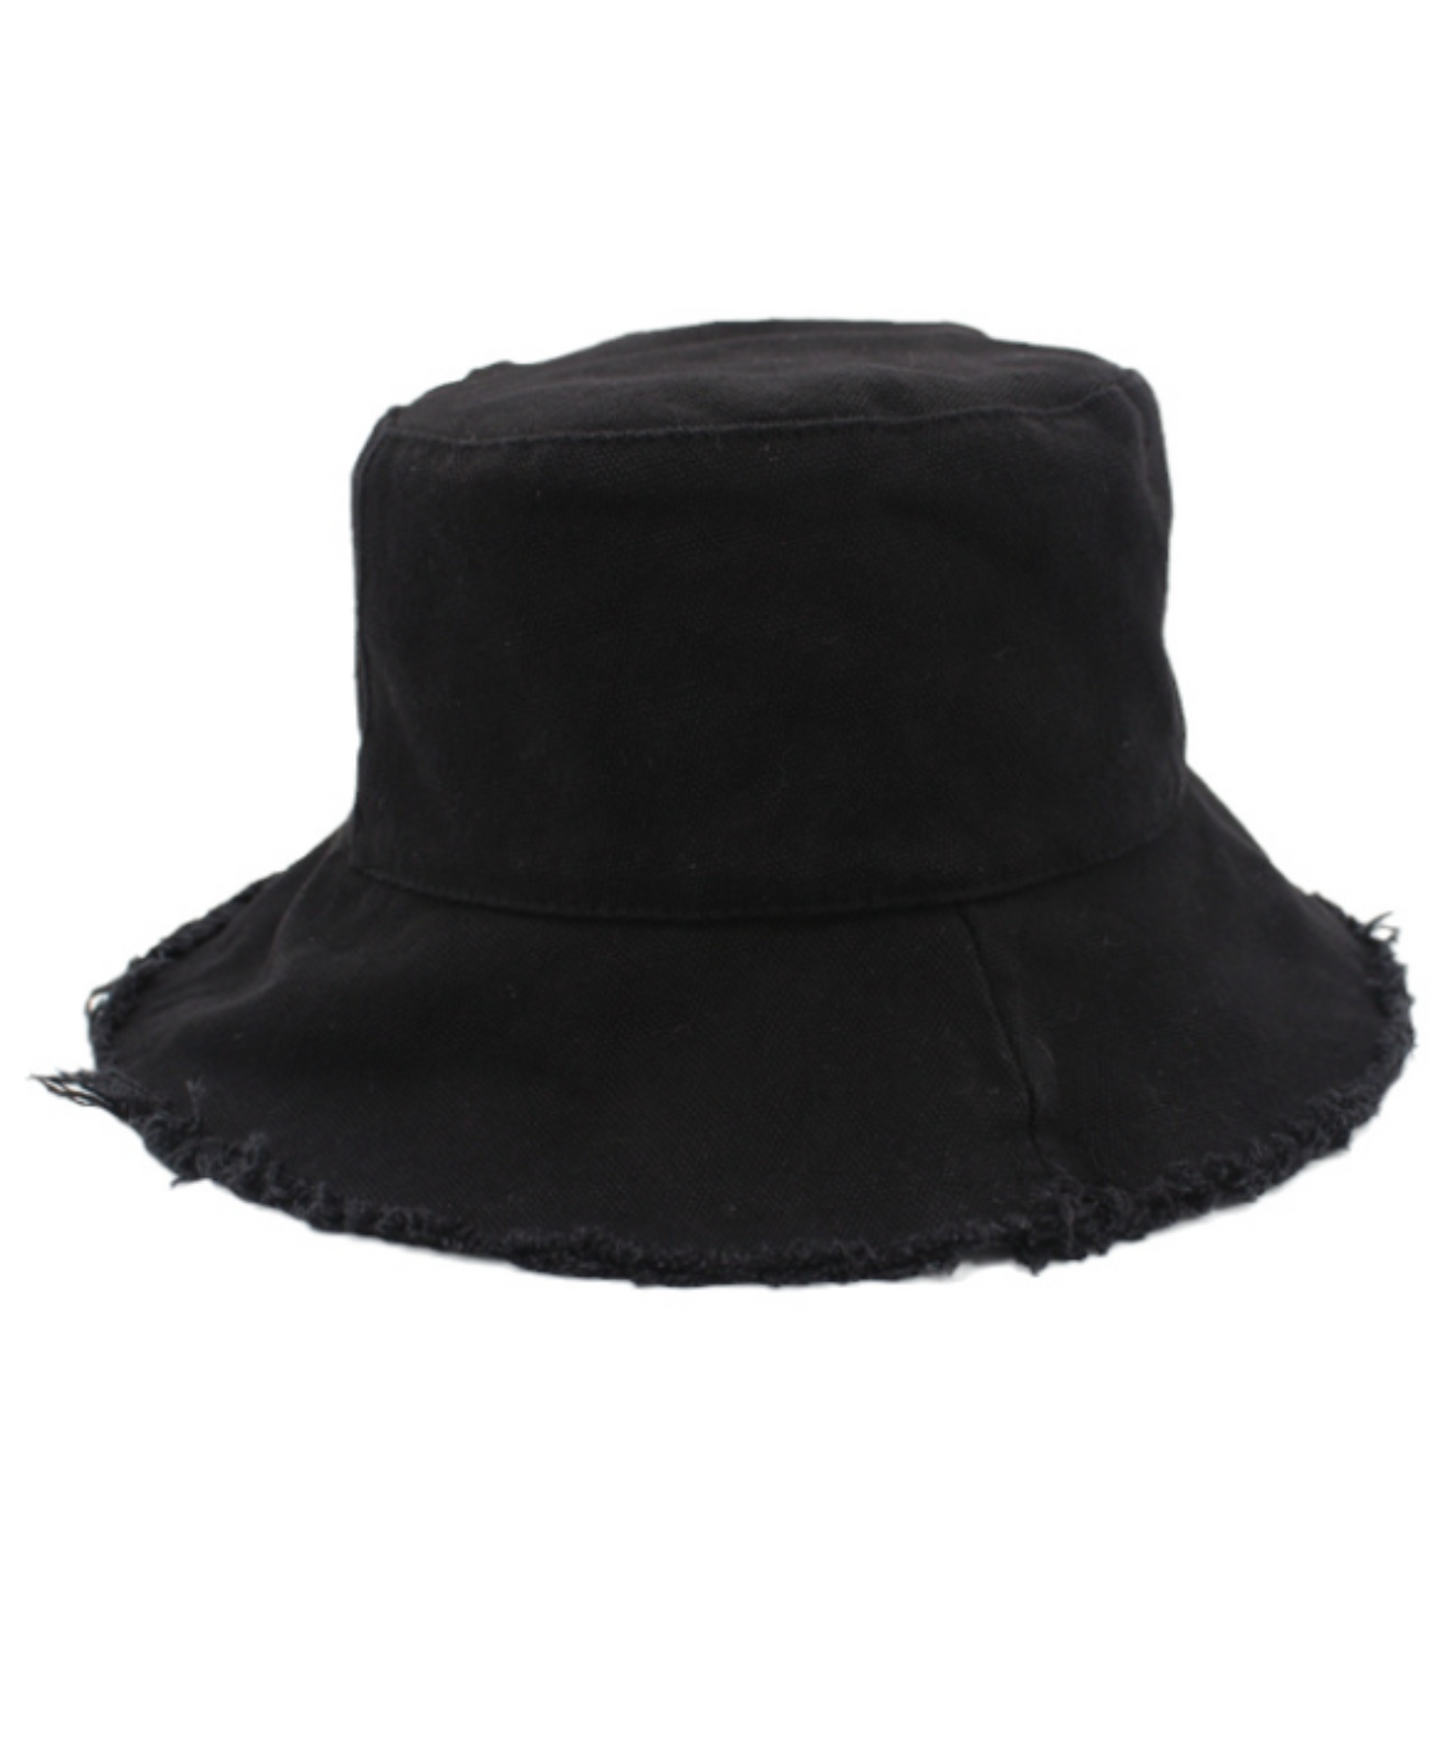 dark street bucket hat EN669